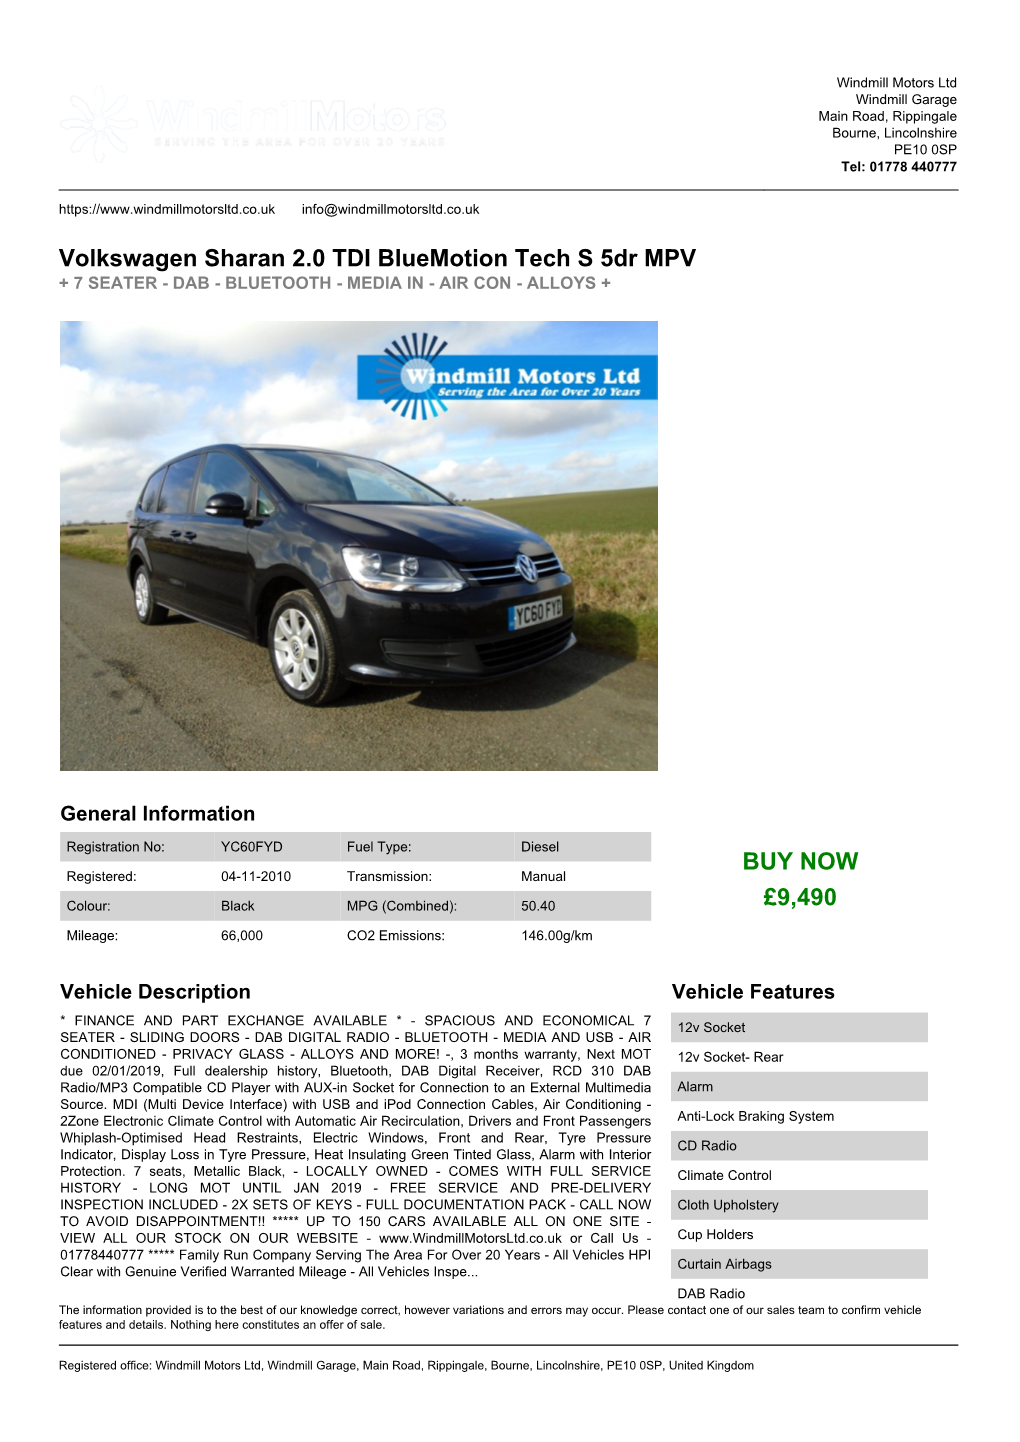 Volkswagen Sharan 2.0 TDI Bluemotion Tech S 5Dr MPV BUY